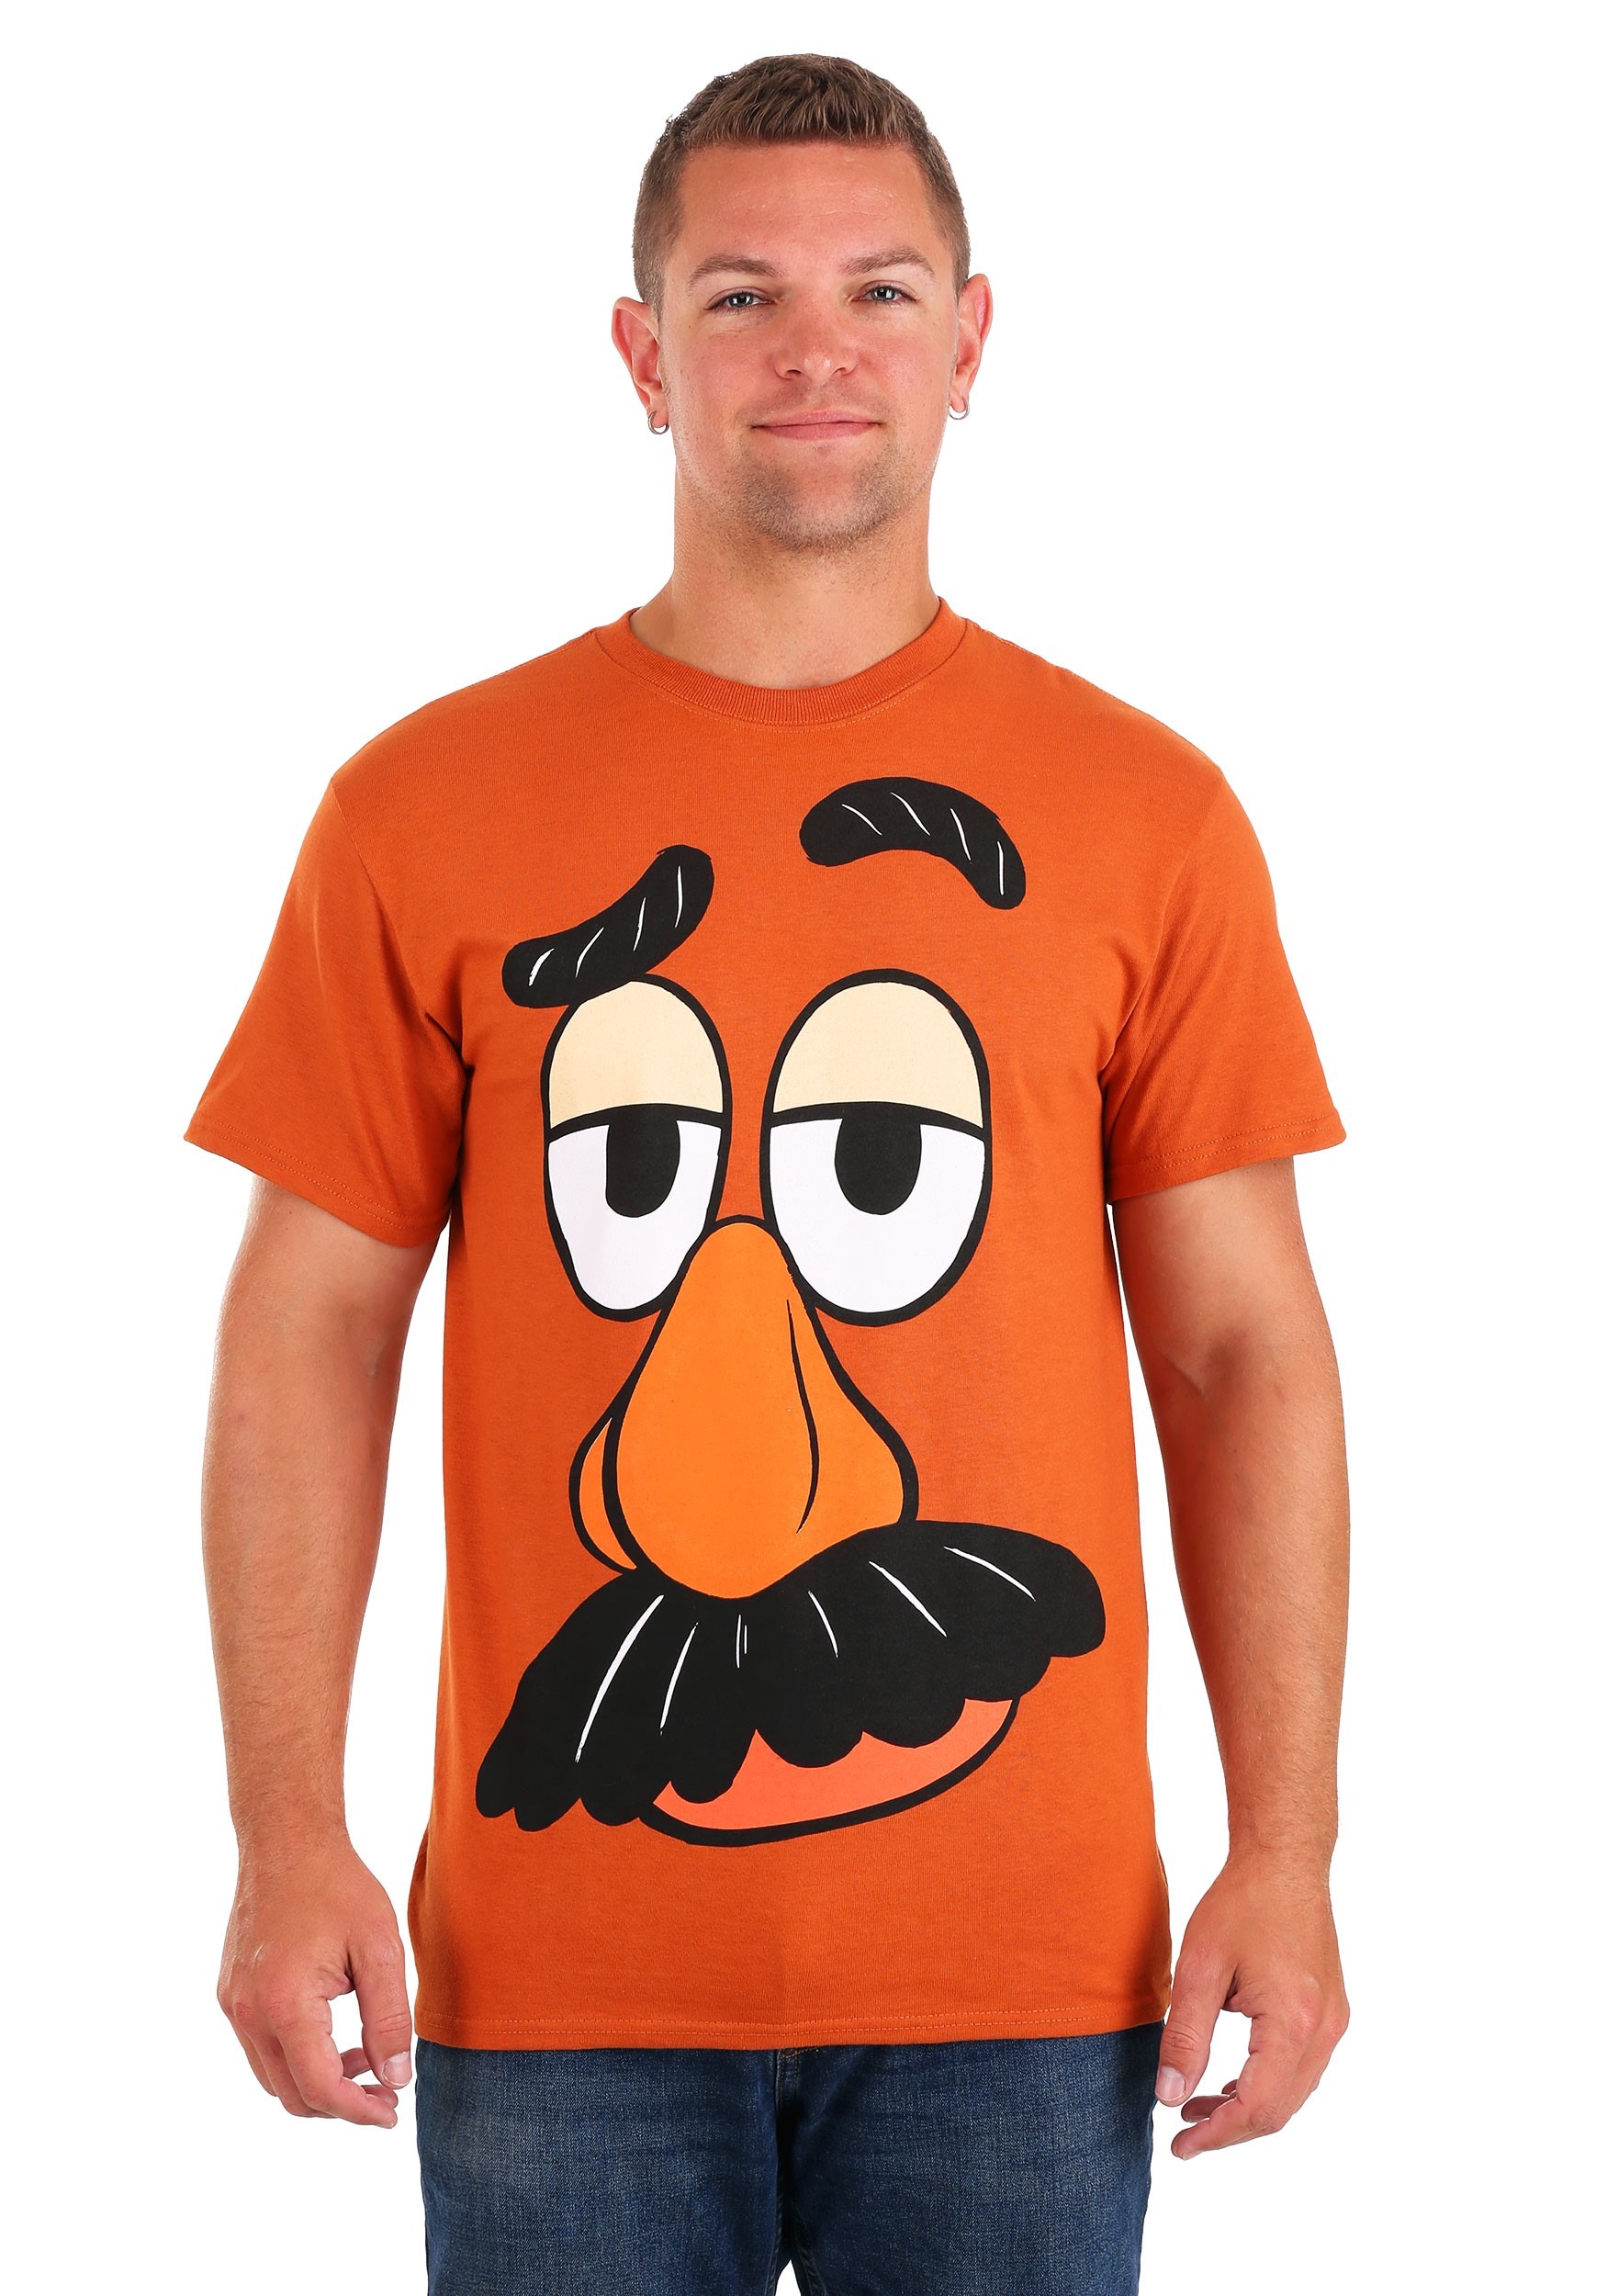 I Am Mr Potato Head: Mandarin Orange Shirt